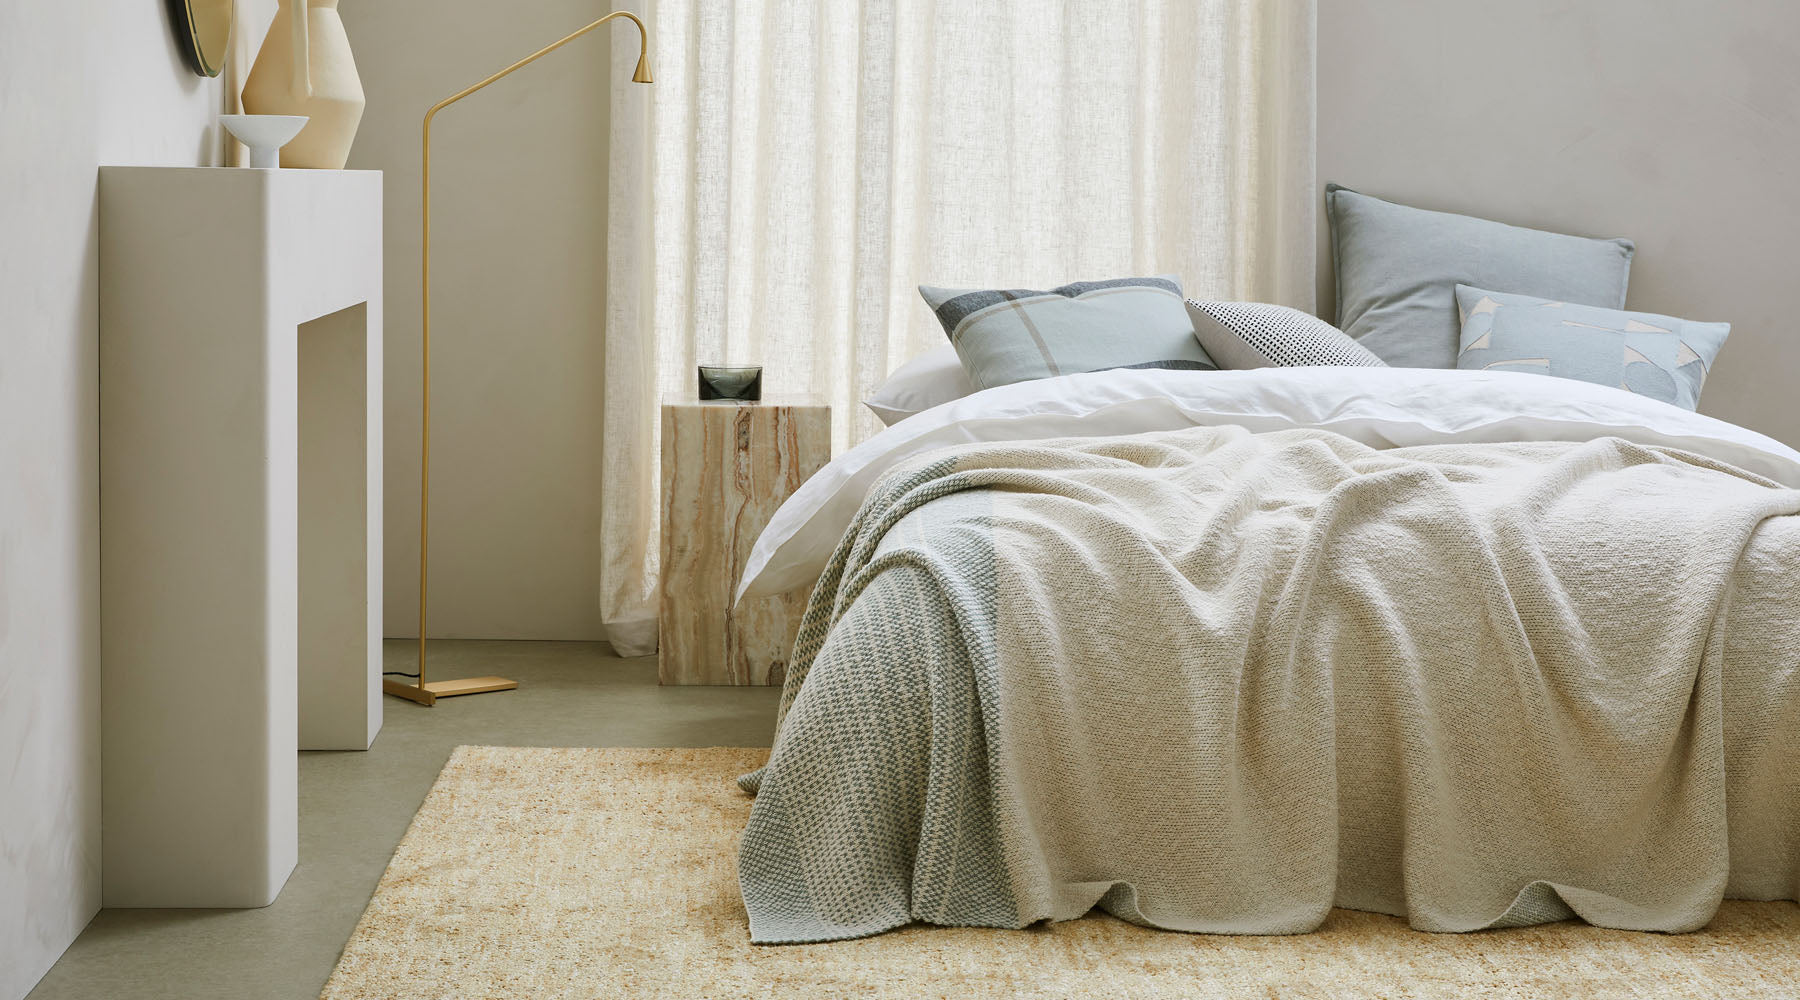 Weave Almonte Honeycomb rug in bedroom